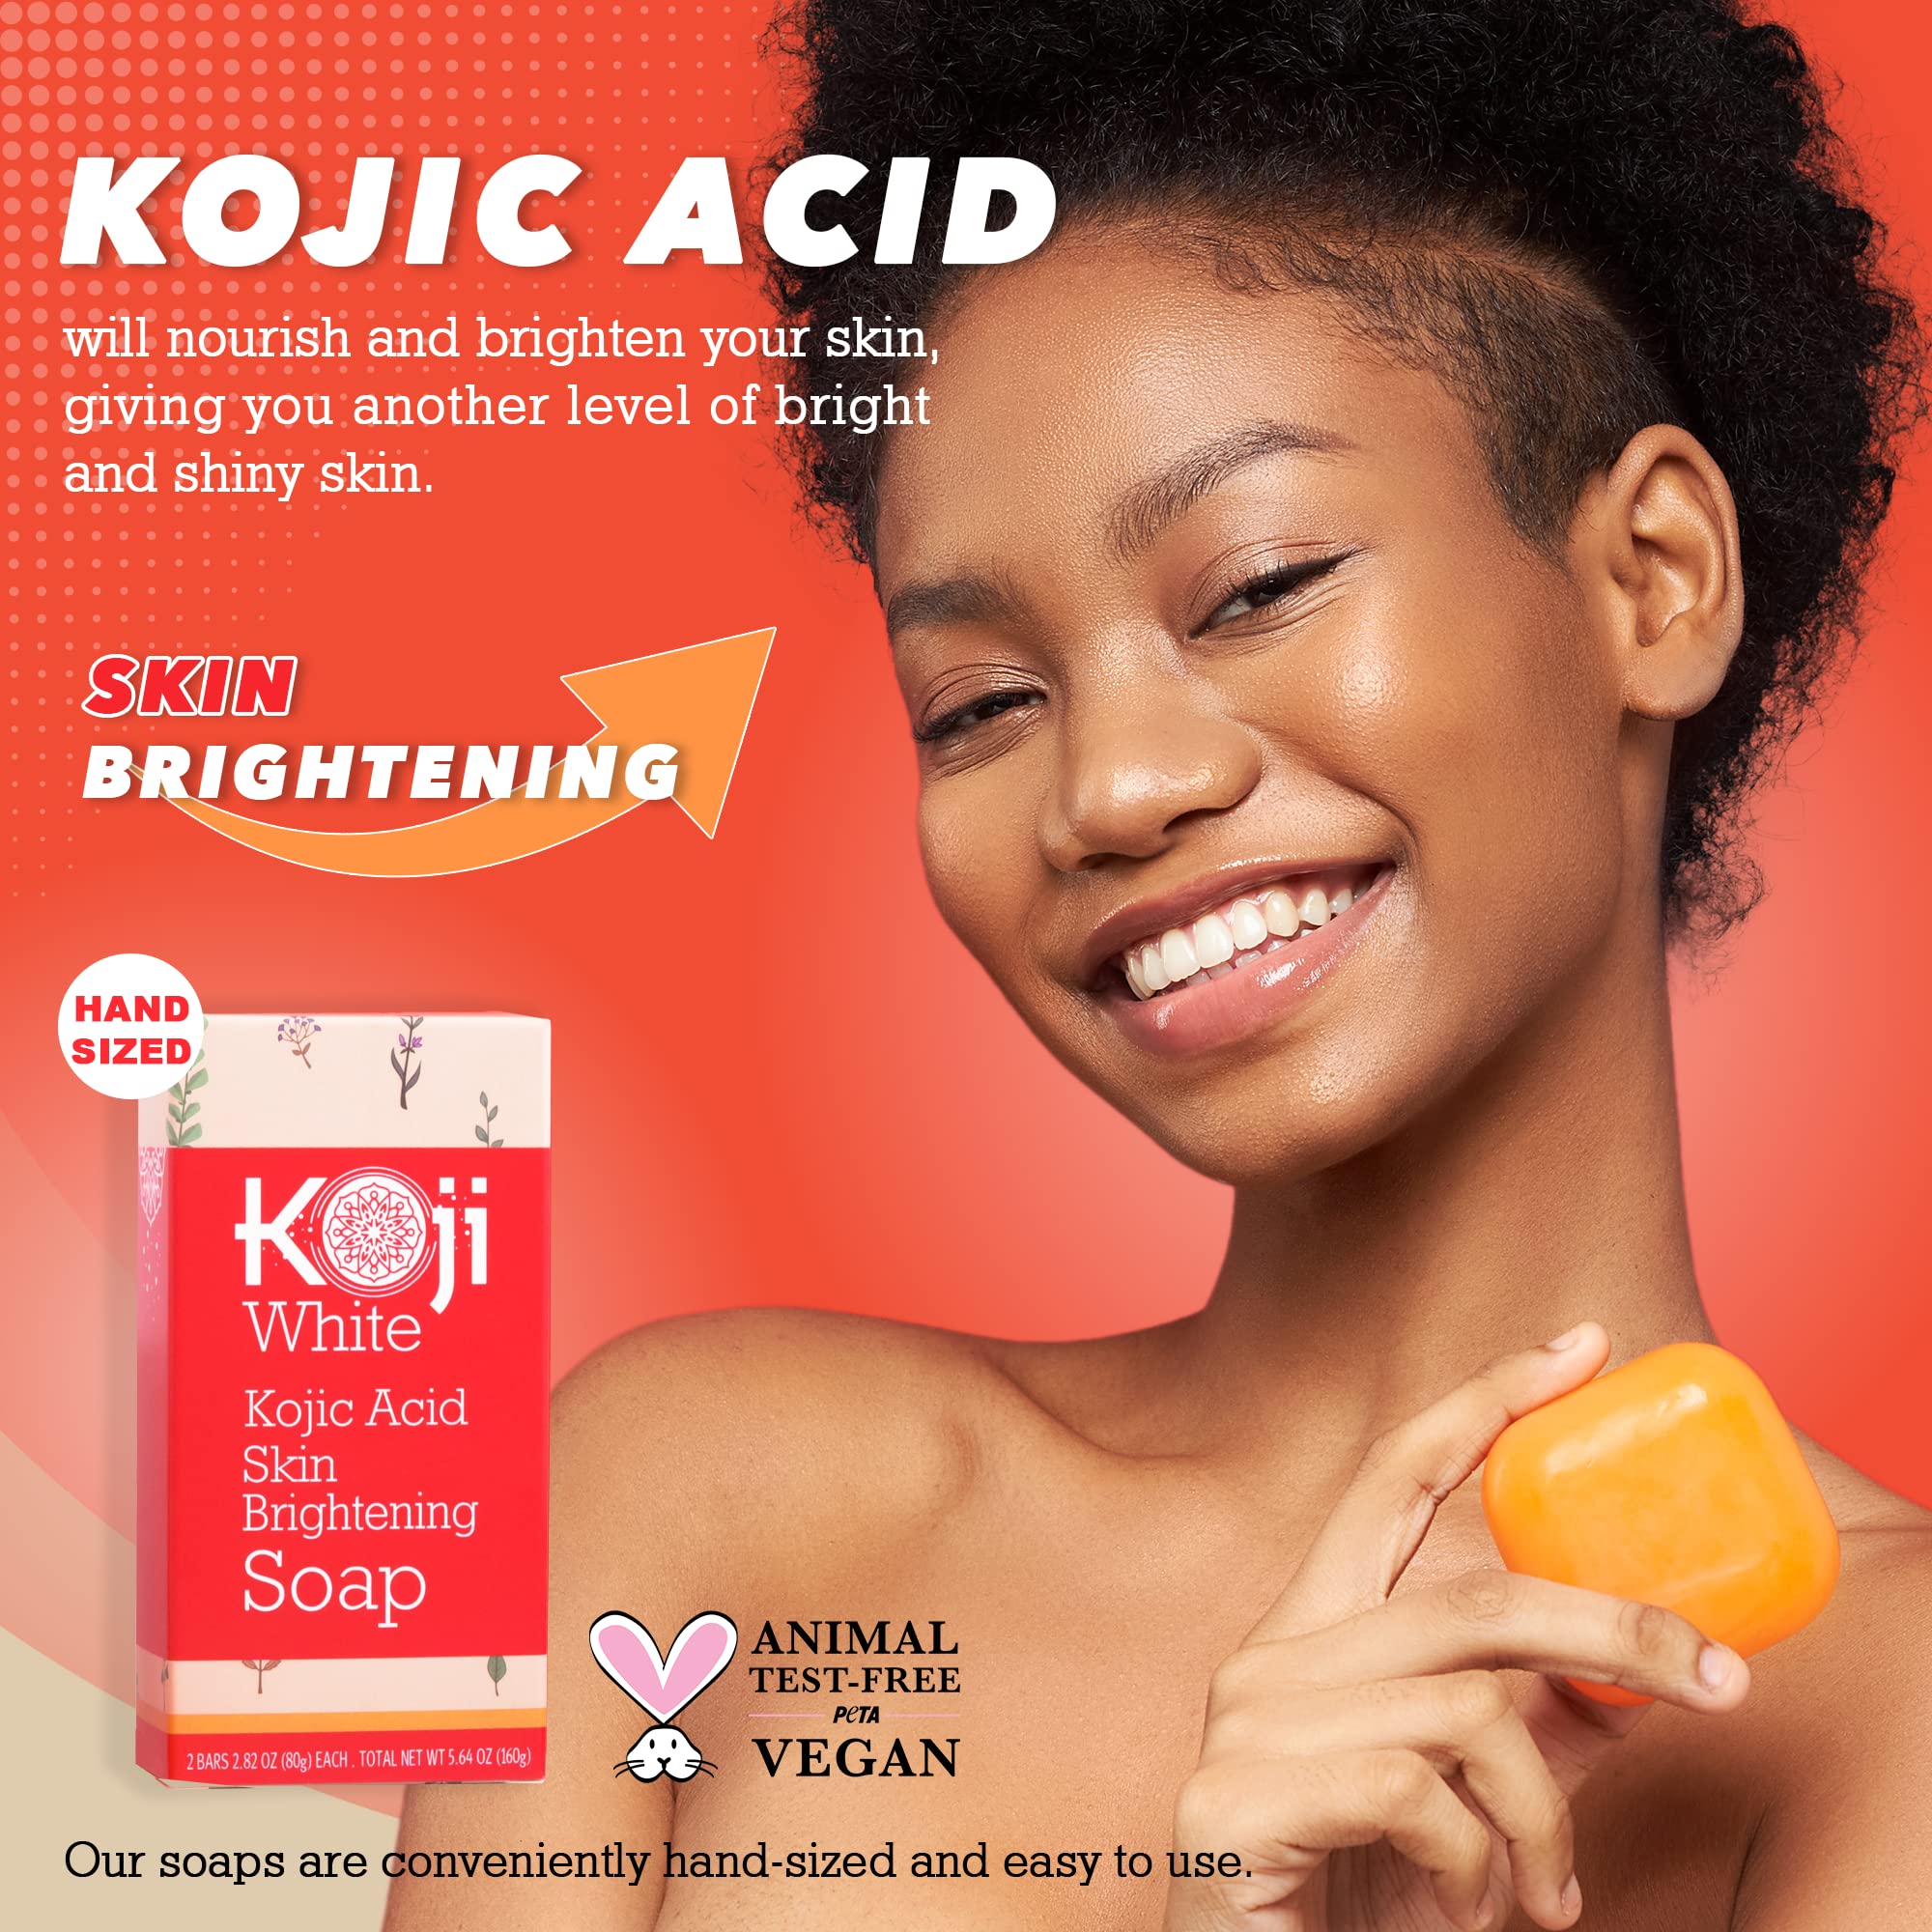 Pure Kojic Acid Skin Brightening Soap for Dark Spot & Glowing Skin, Moisturizing for Face & Body, Acne Scars, Melasma, Uneven Skin Tone with Tea Tree, Coconut Oil, Vegan Soap 2.82 oz (2 Bars)